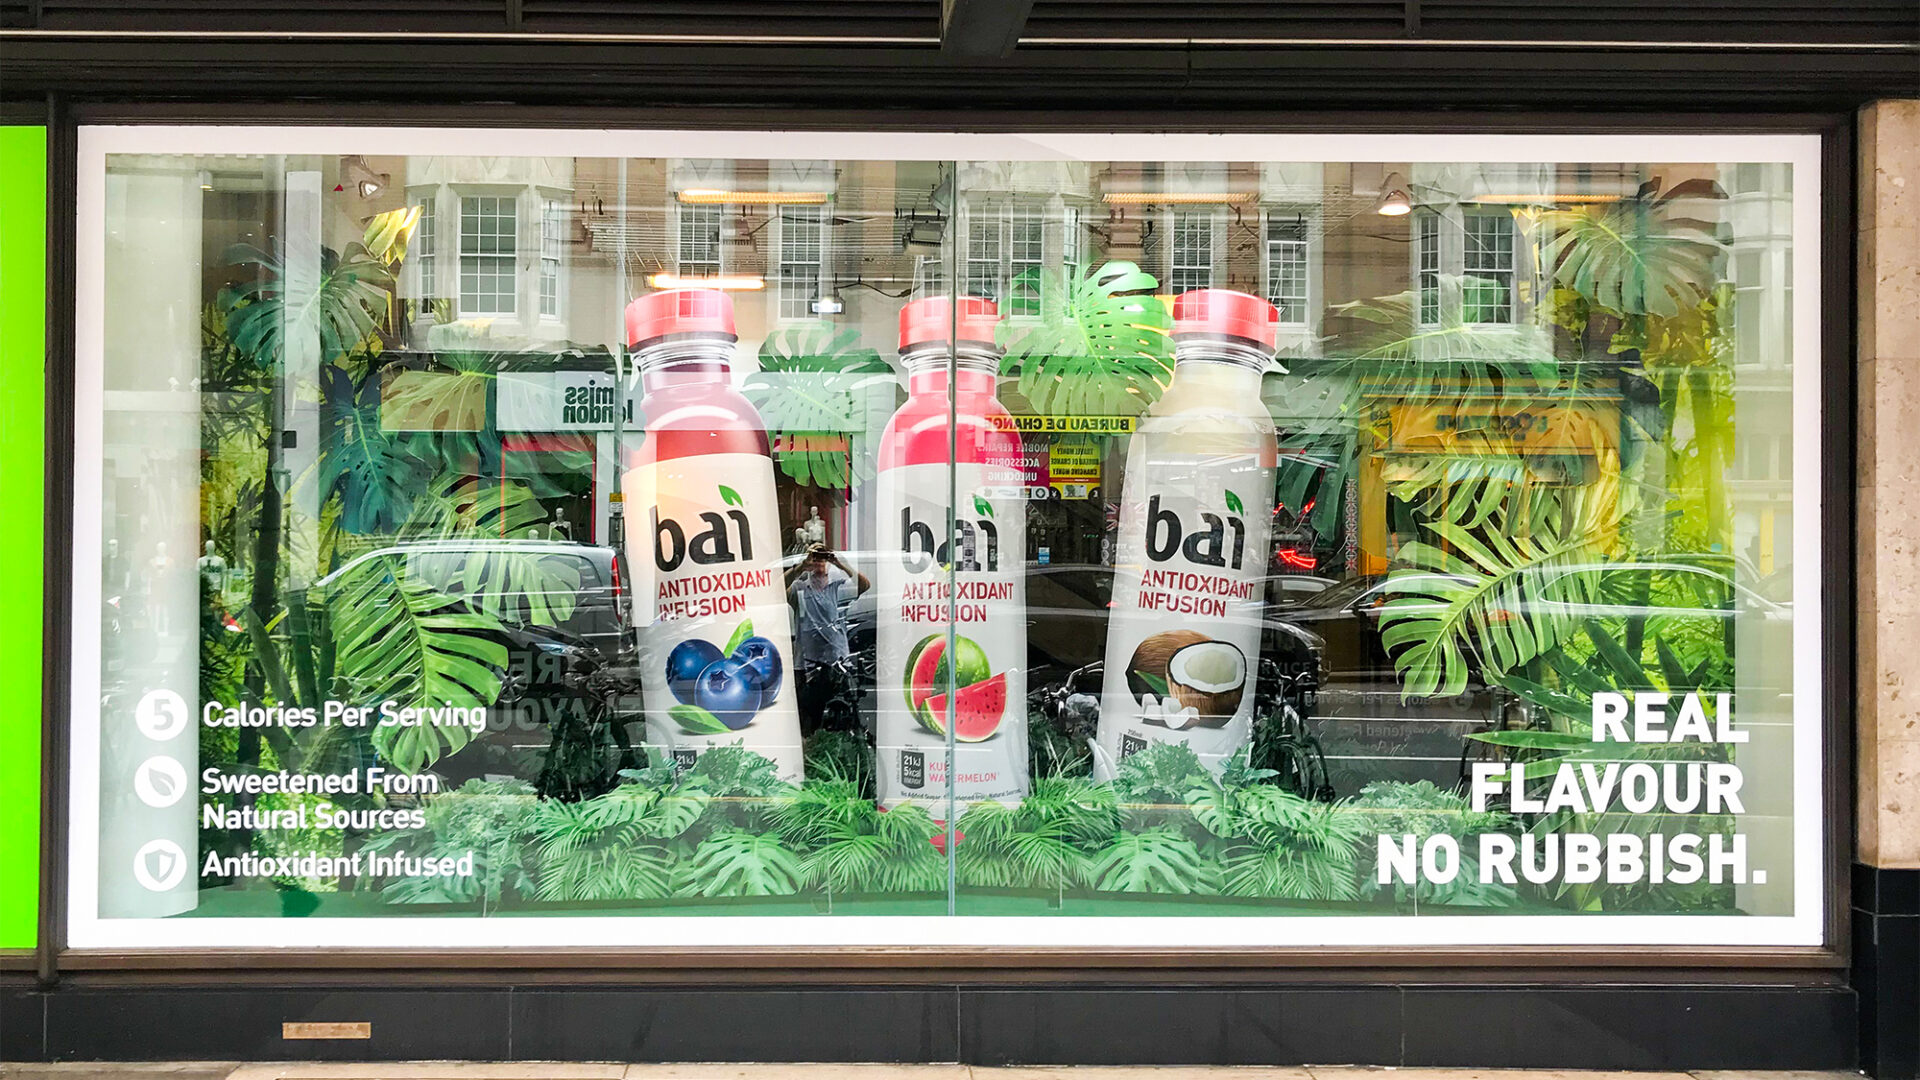 Bai Drink - Whole Foods Market - Window Display